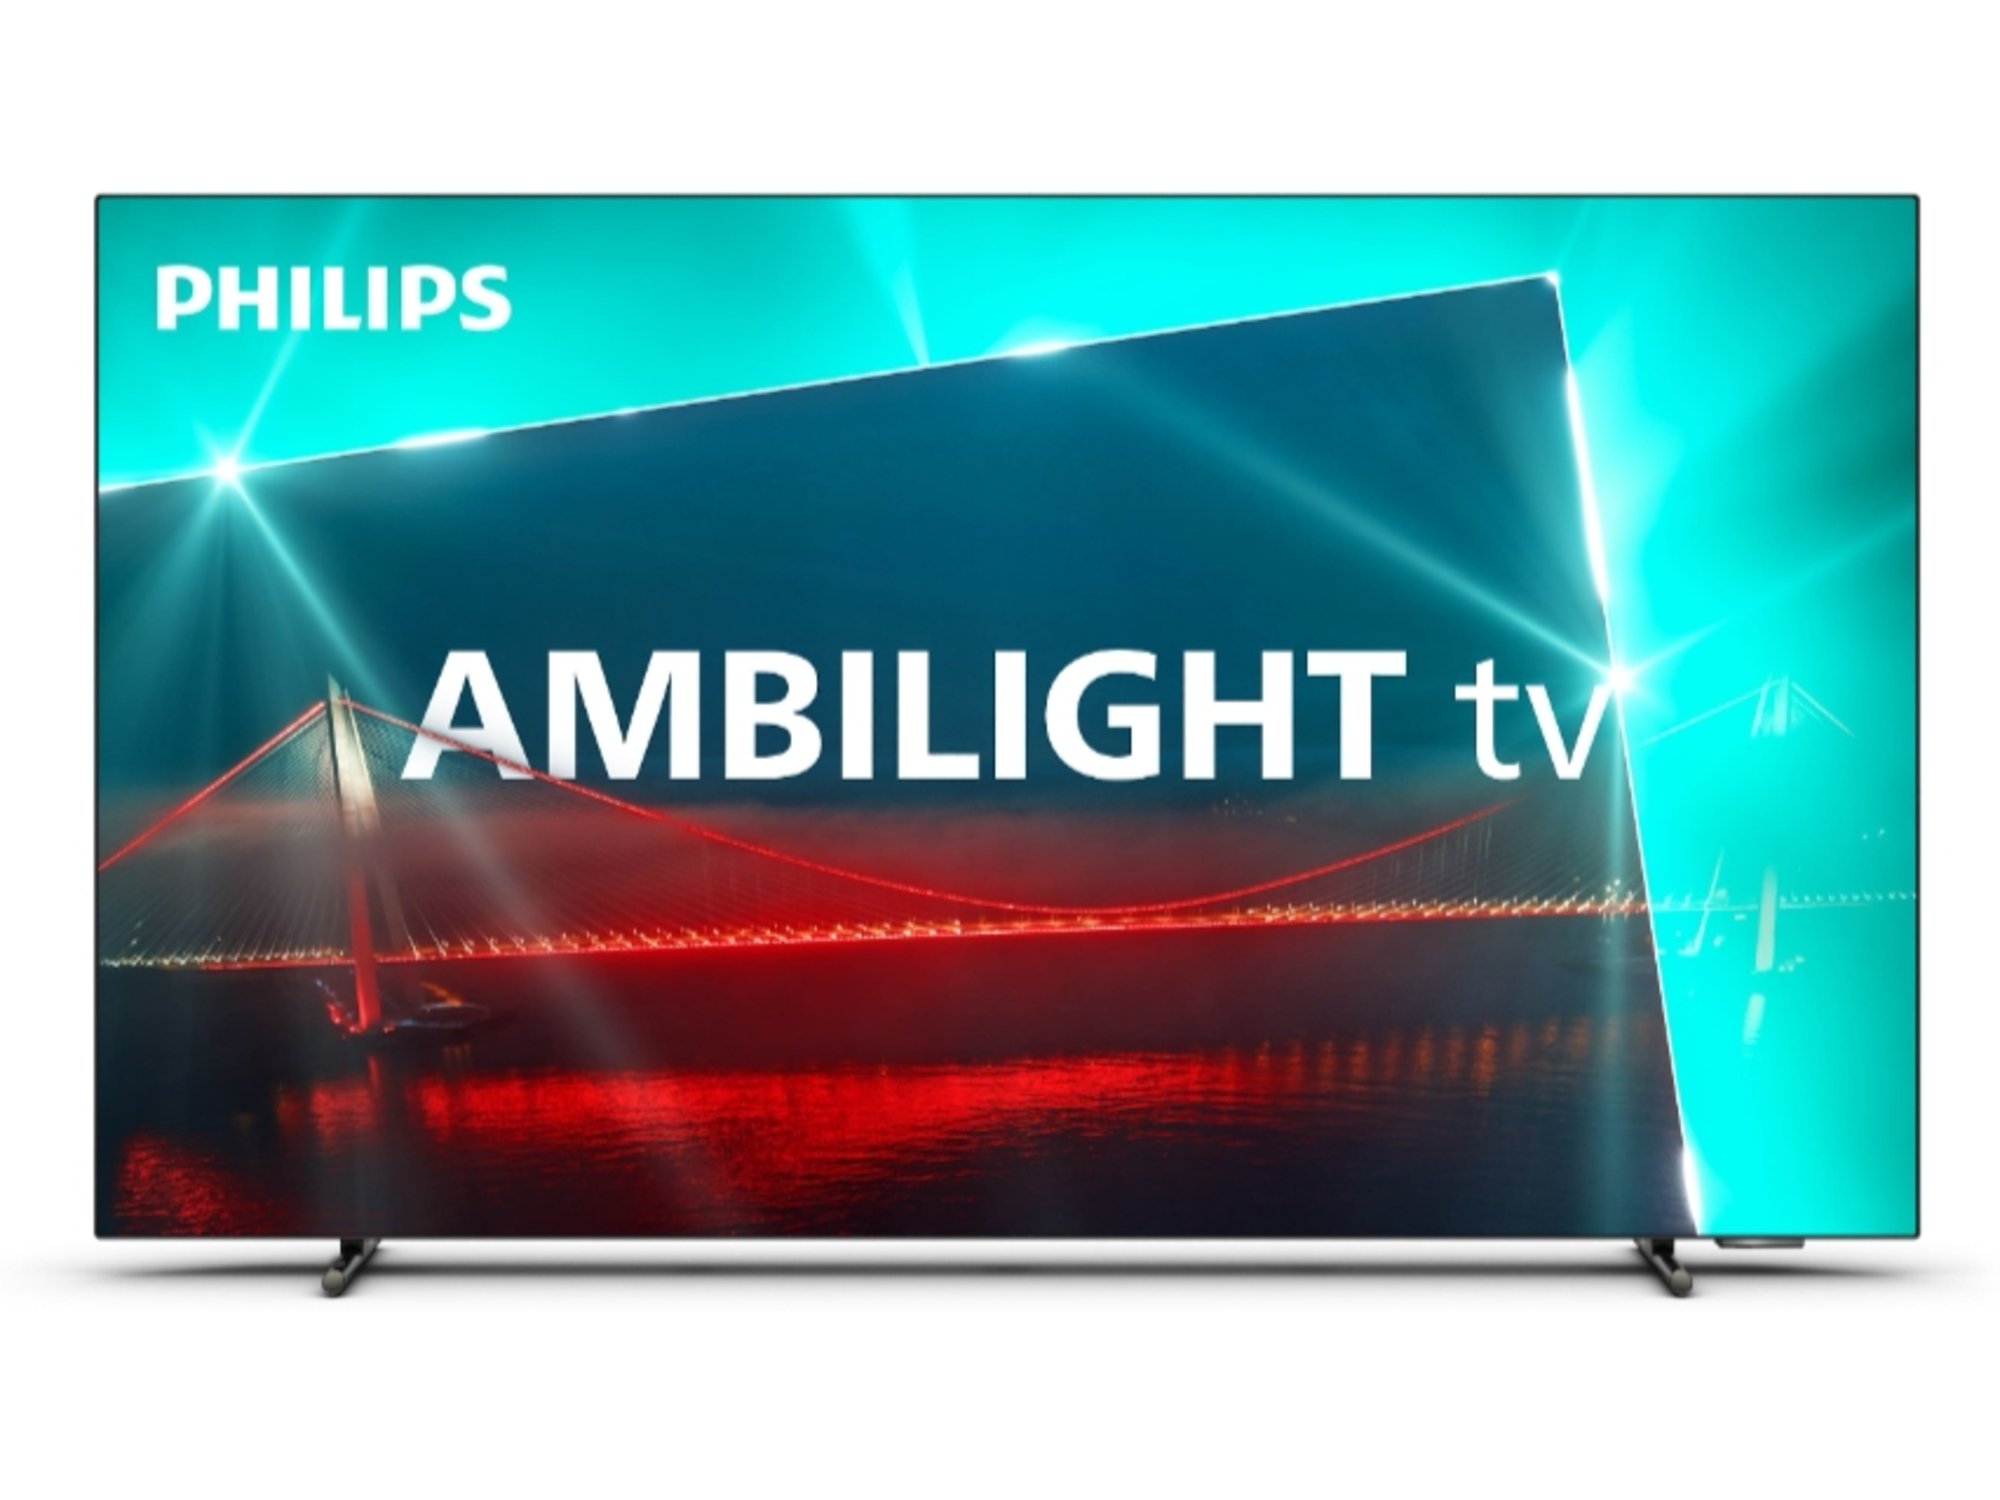 PHILIPS Smart TV LED sprejemnik, 65OLED718/12, 164 cm